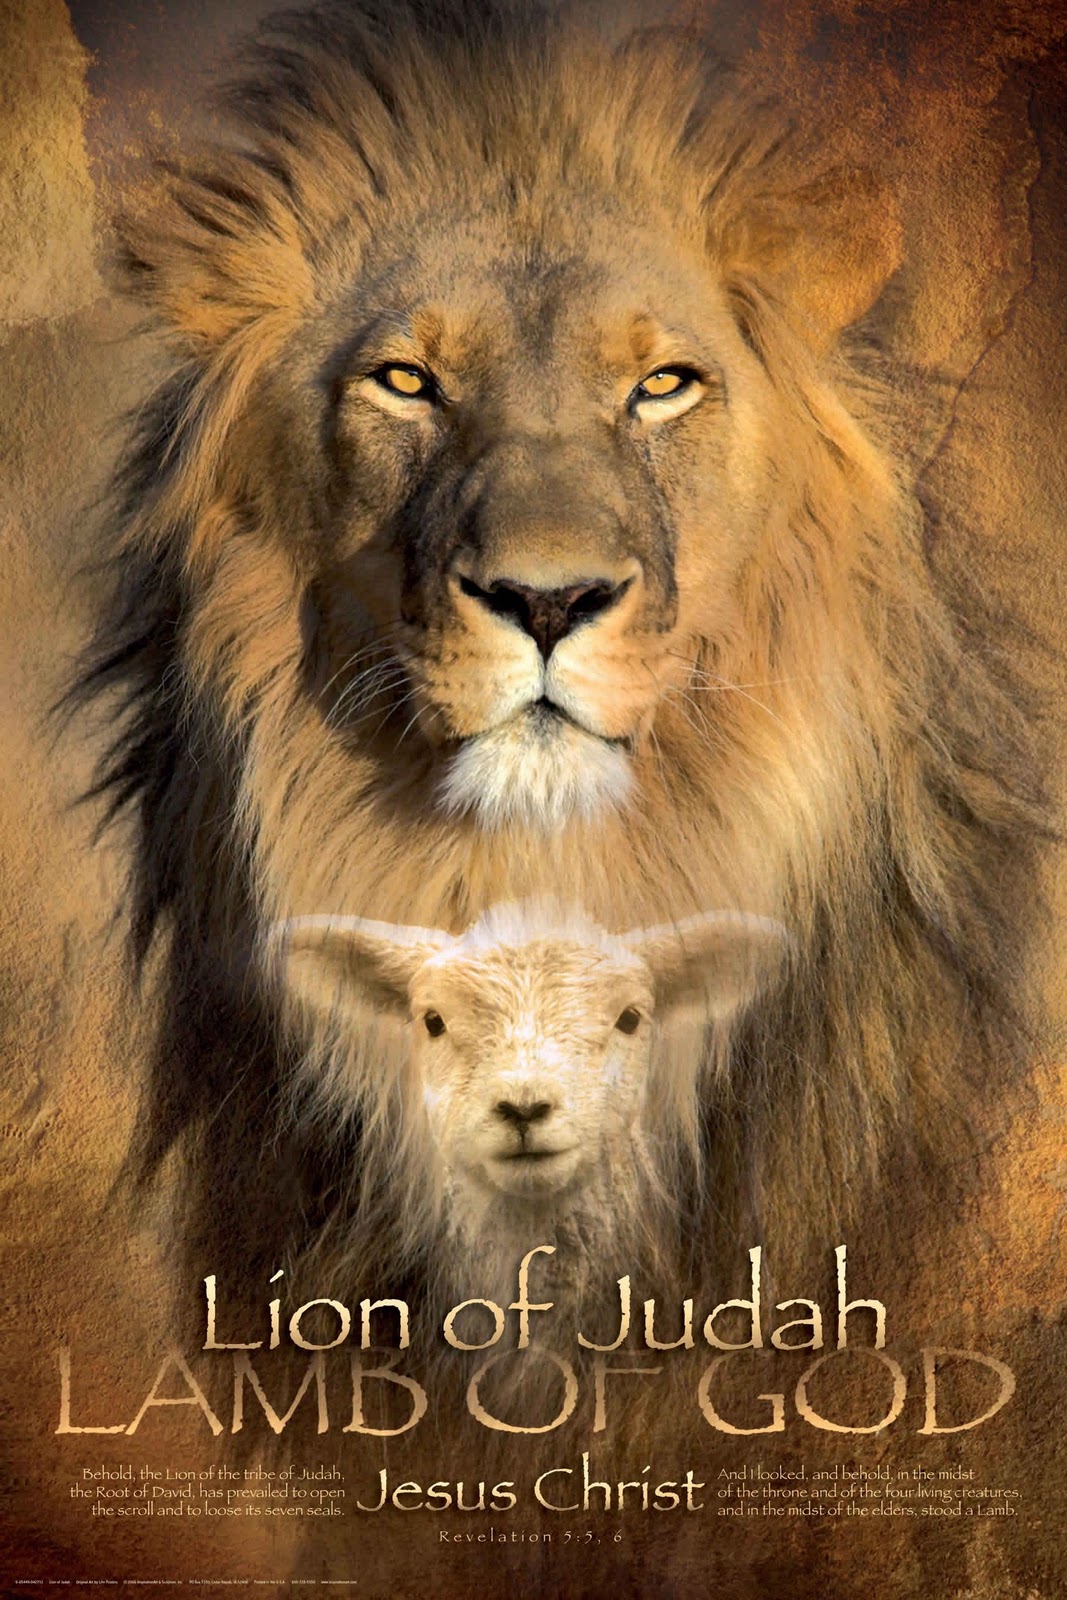 Judah Bible Quotes. QuotesGram